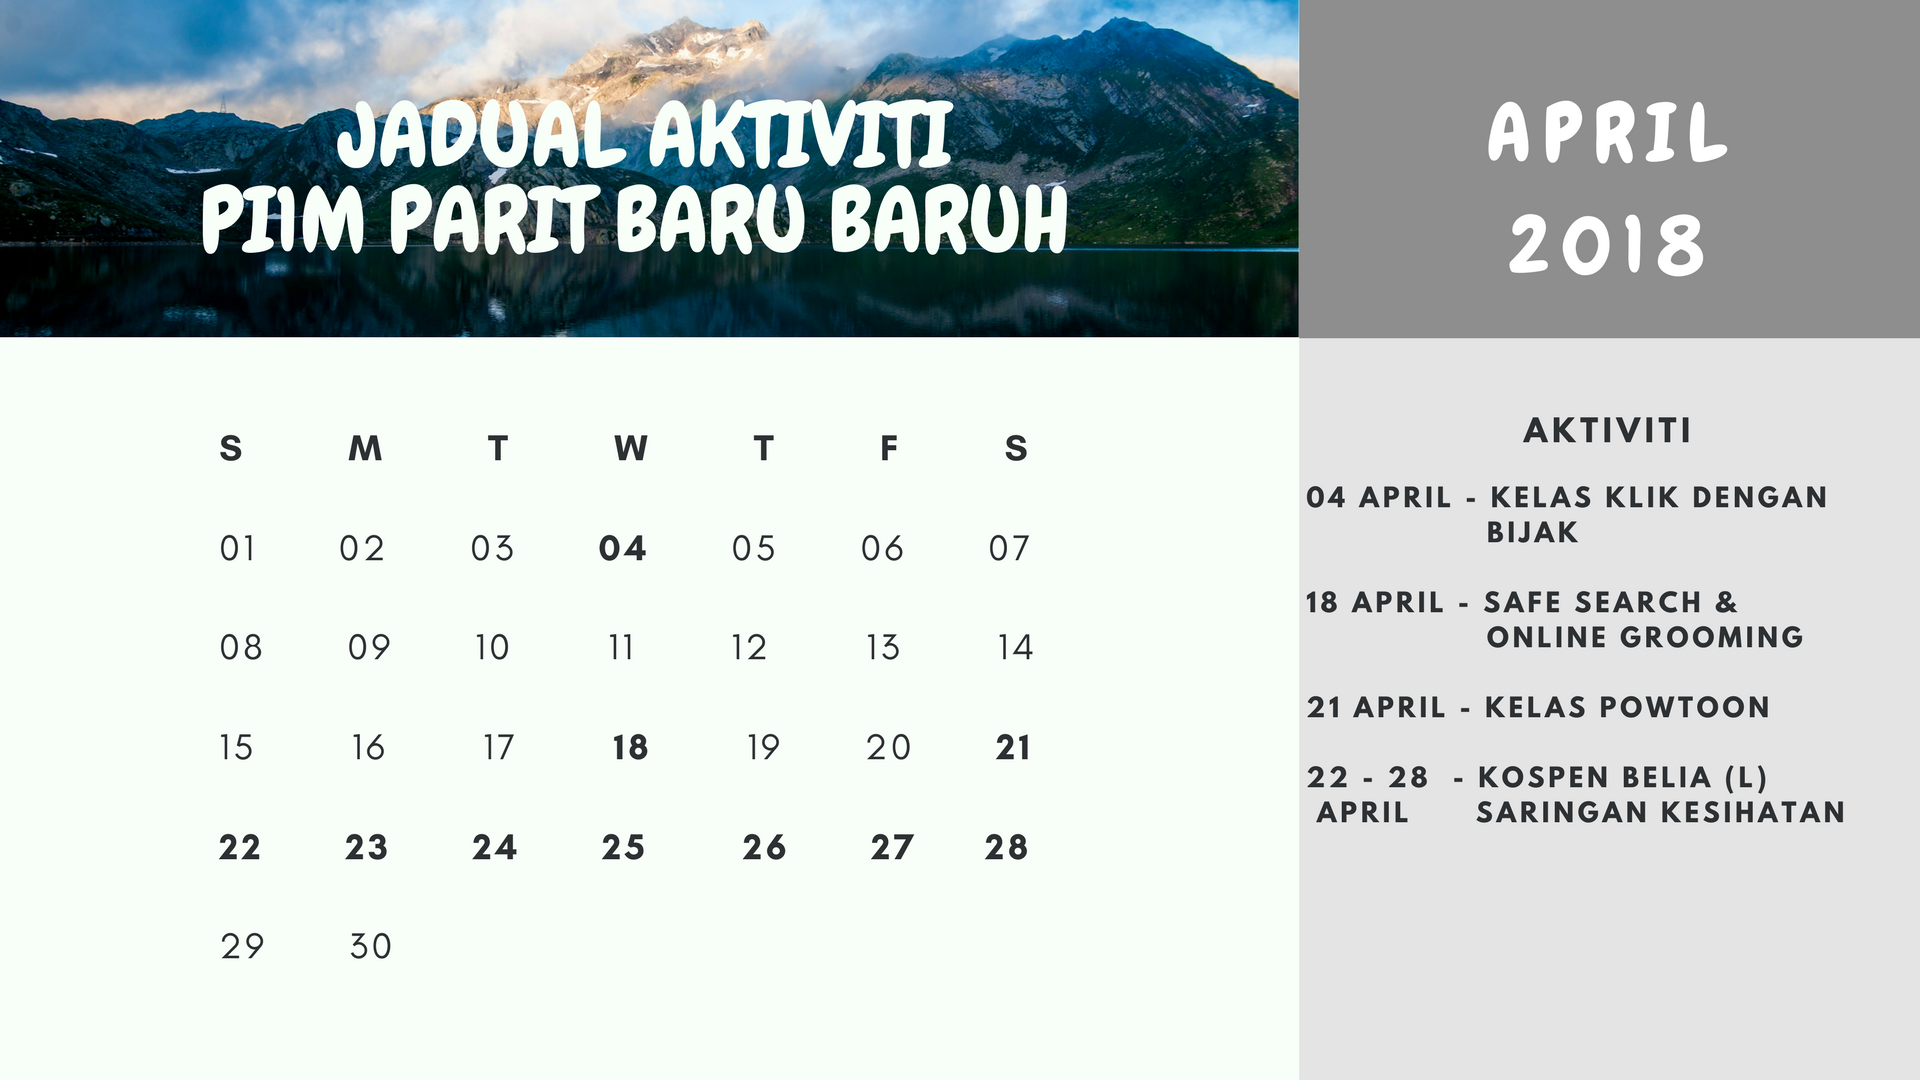 jadual aktiviti april 2018